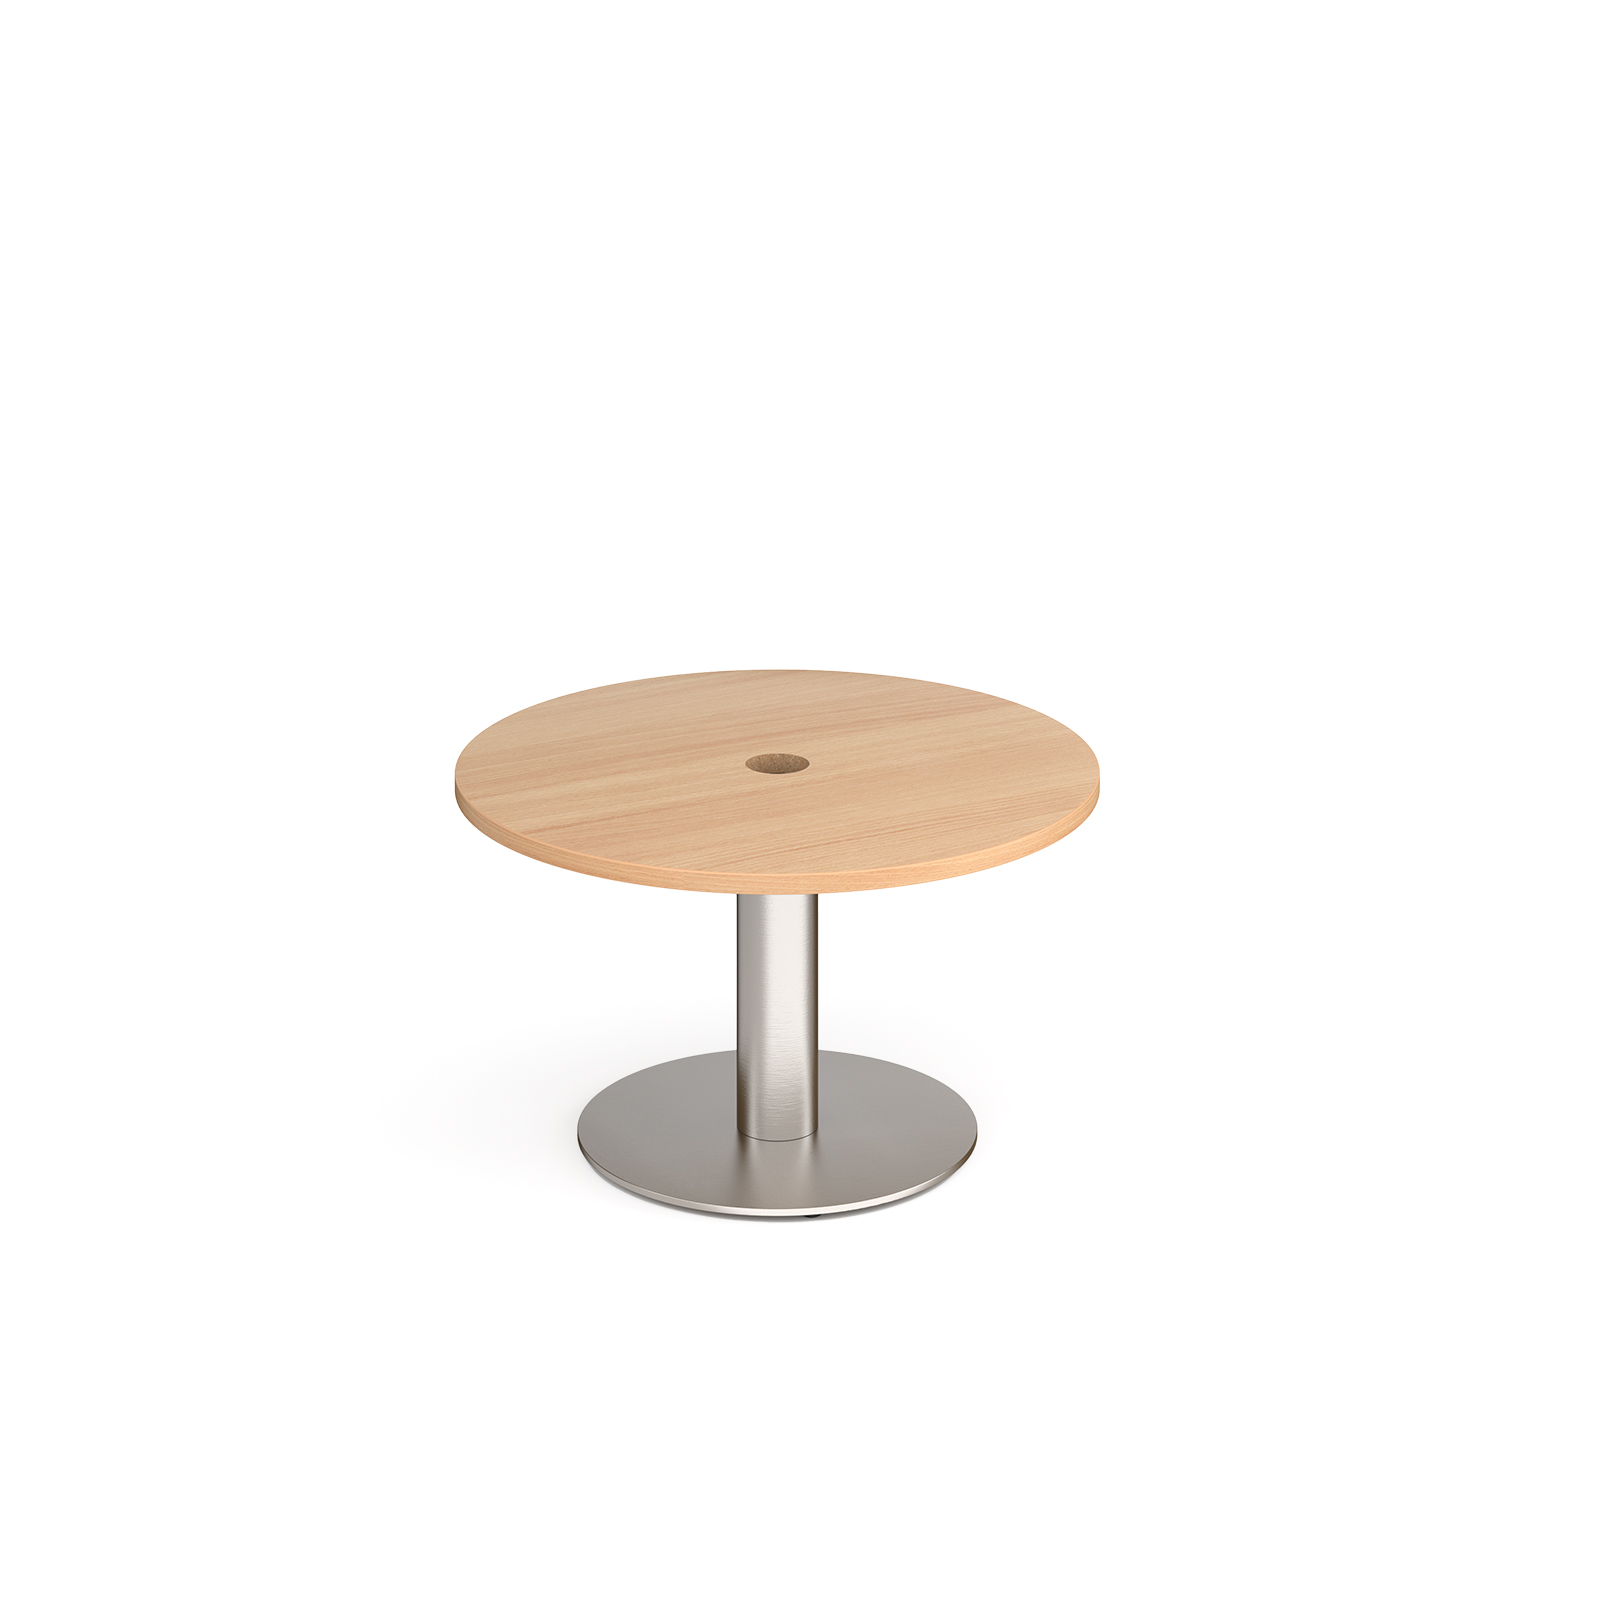 Monza circular coffee table 800mm with central circular cutout 80mm - beech